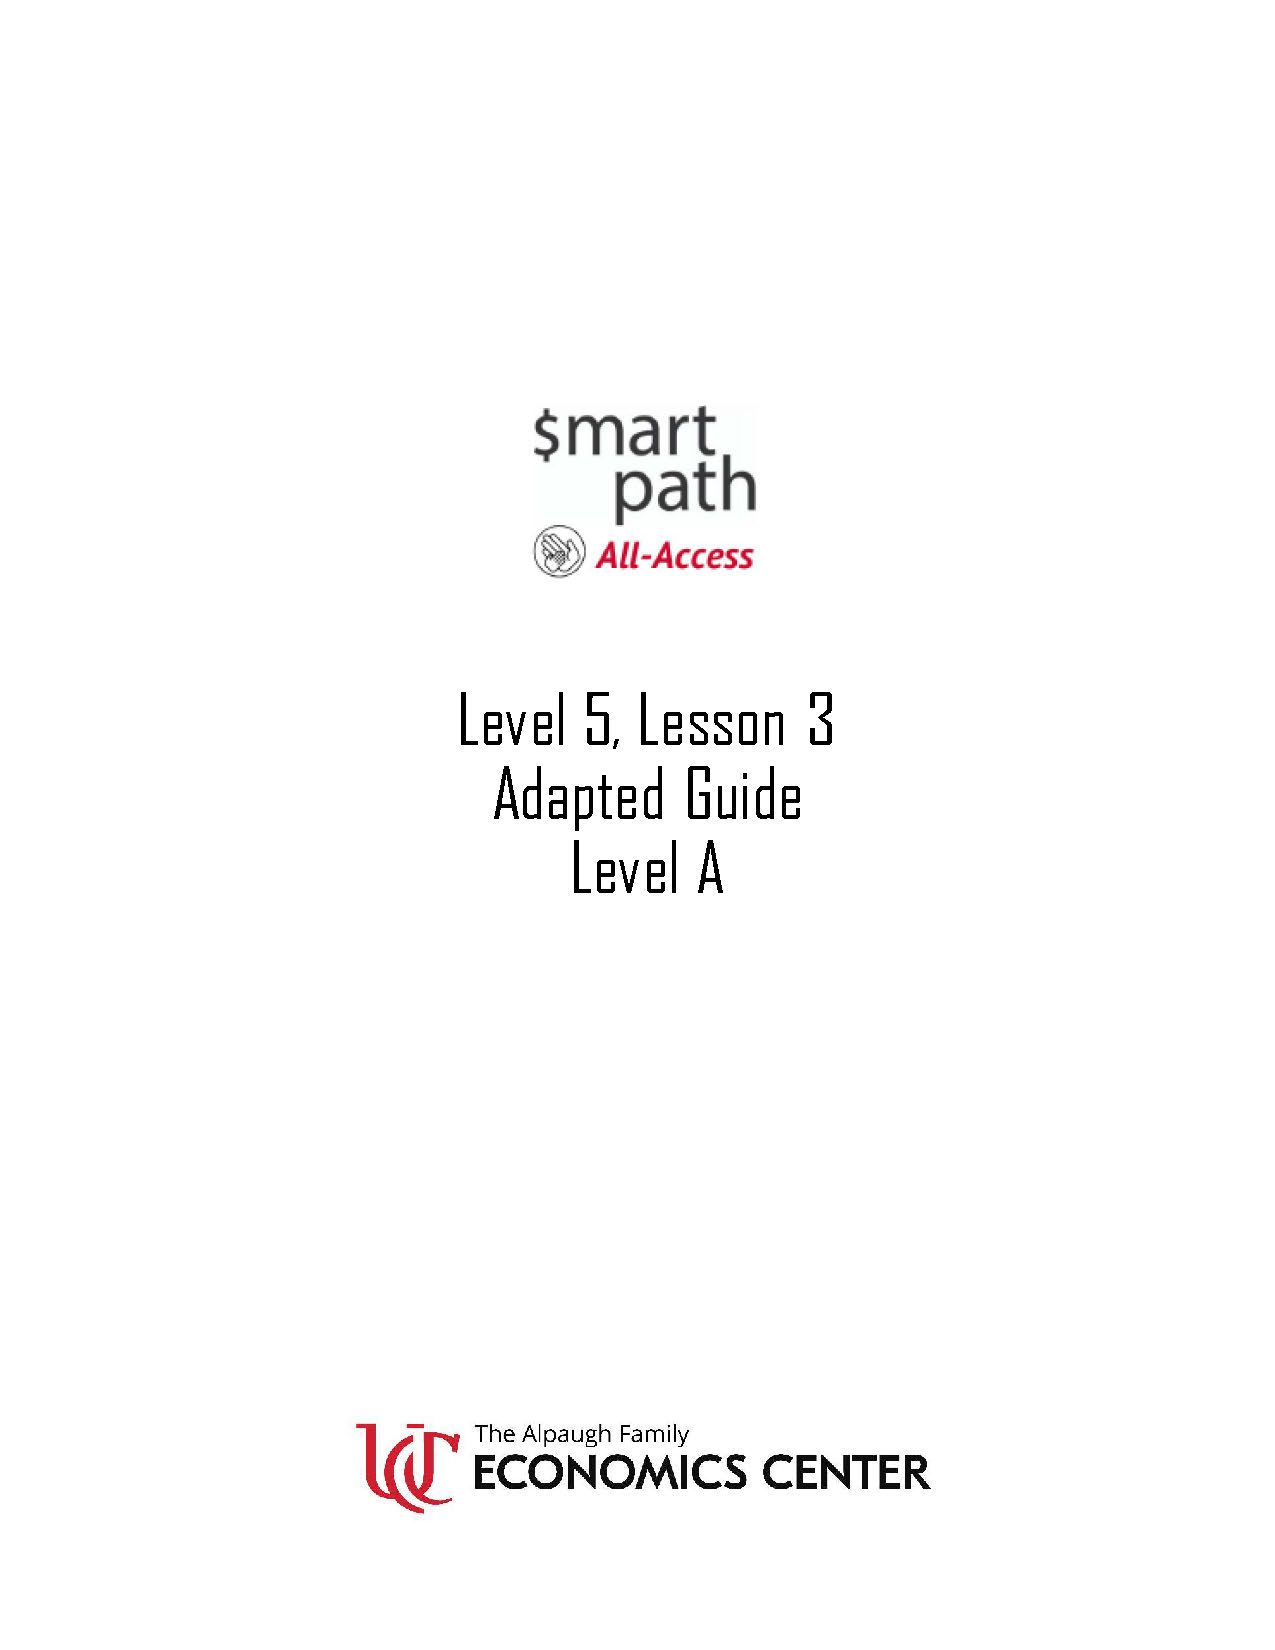 Level 5 Lesson 3 cover